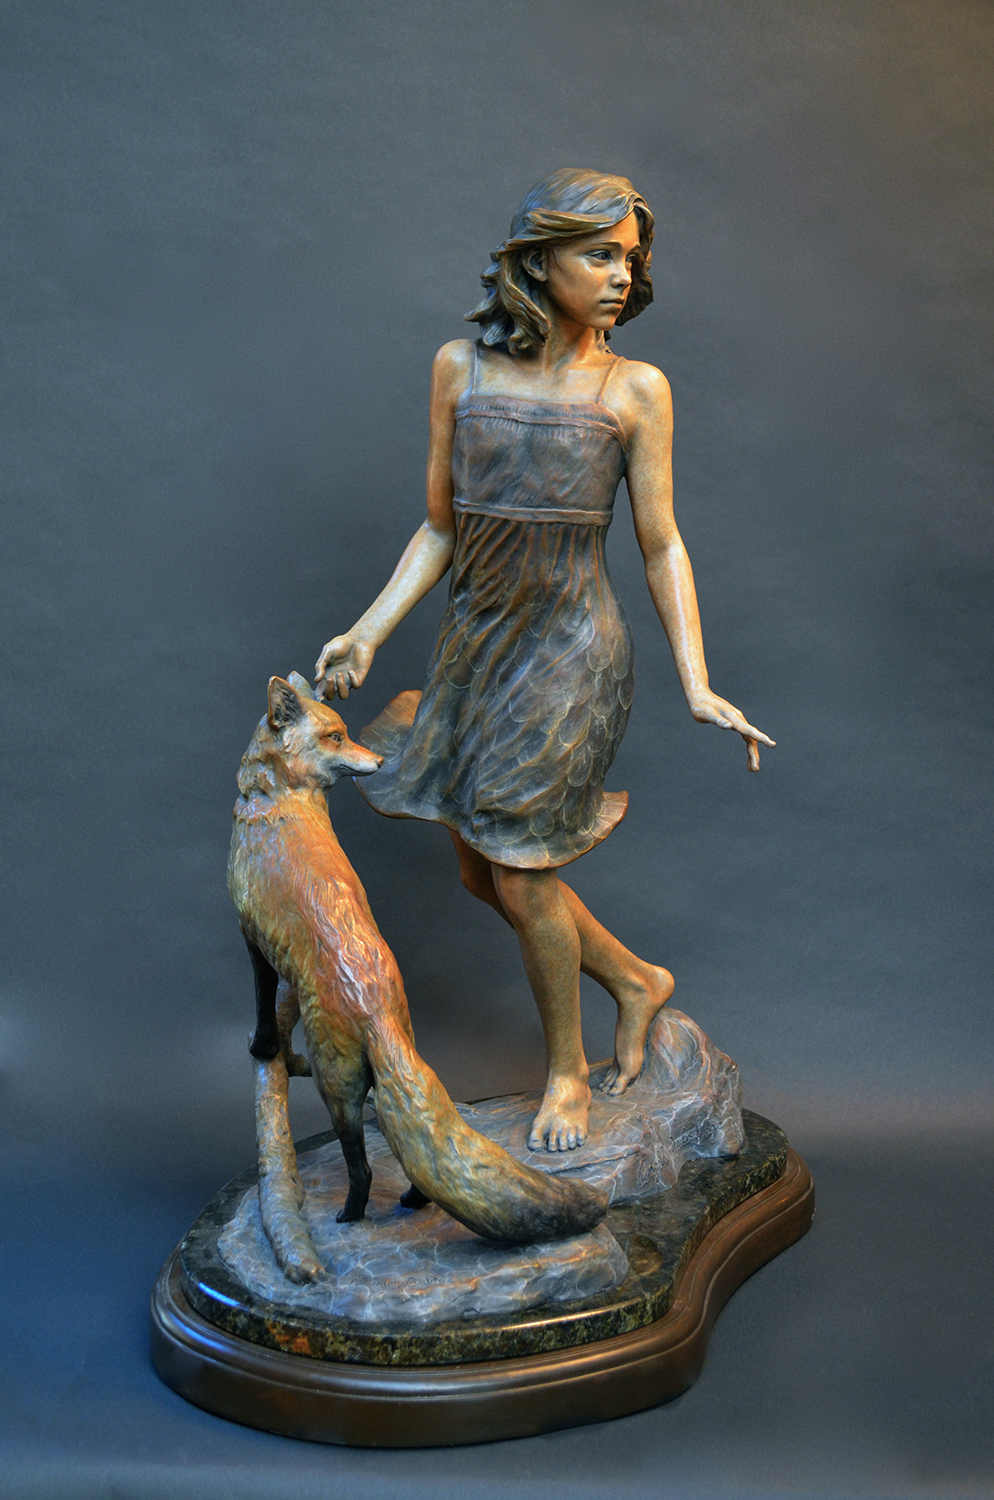 Poetic Figurative Bronze Sculptures By Angela Mia De La Vega (17)